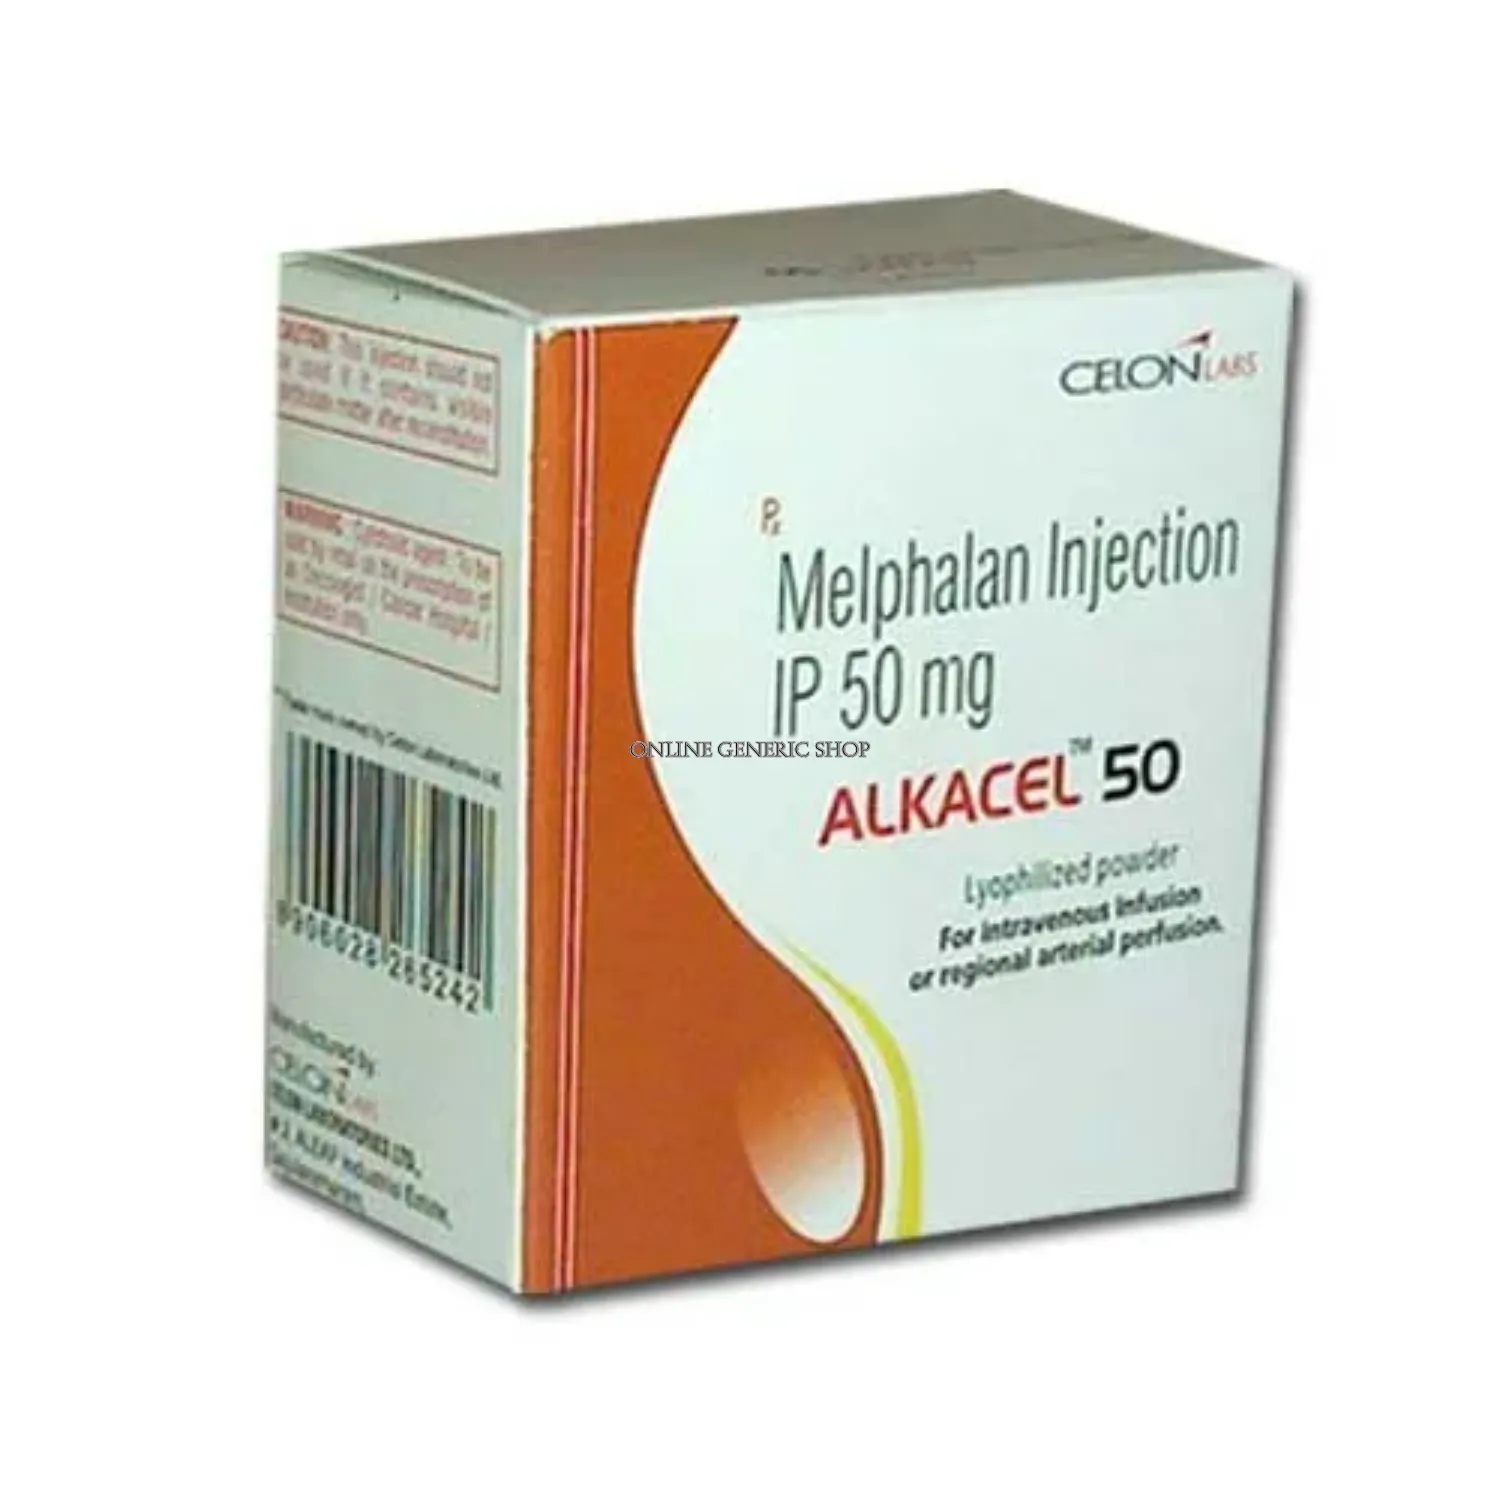 Alkacel 50 Mg Injection Image